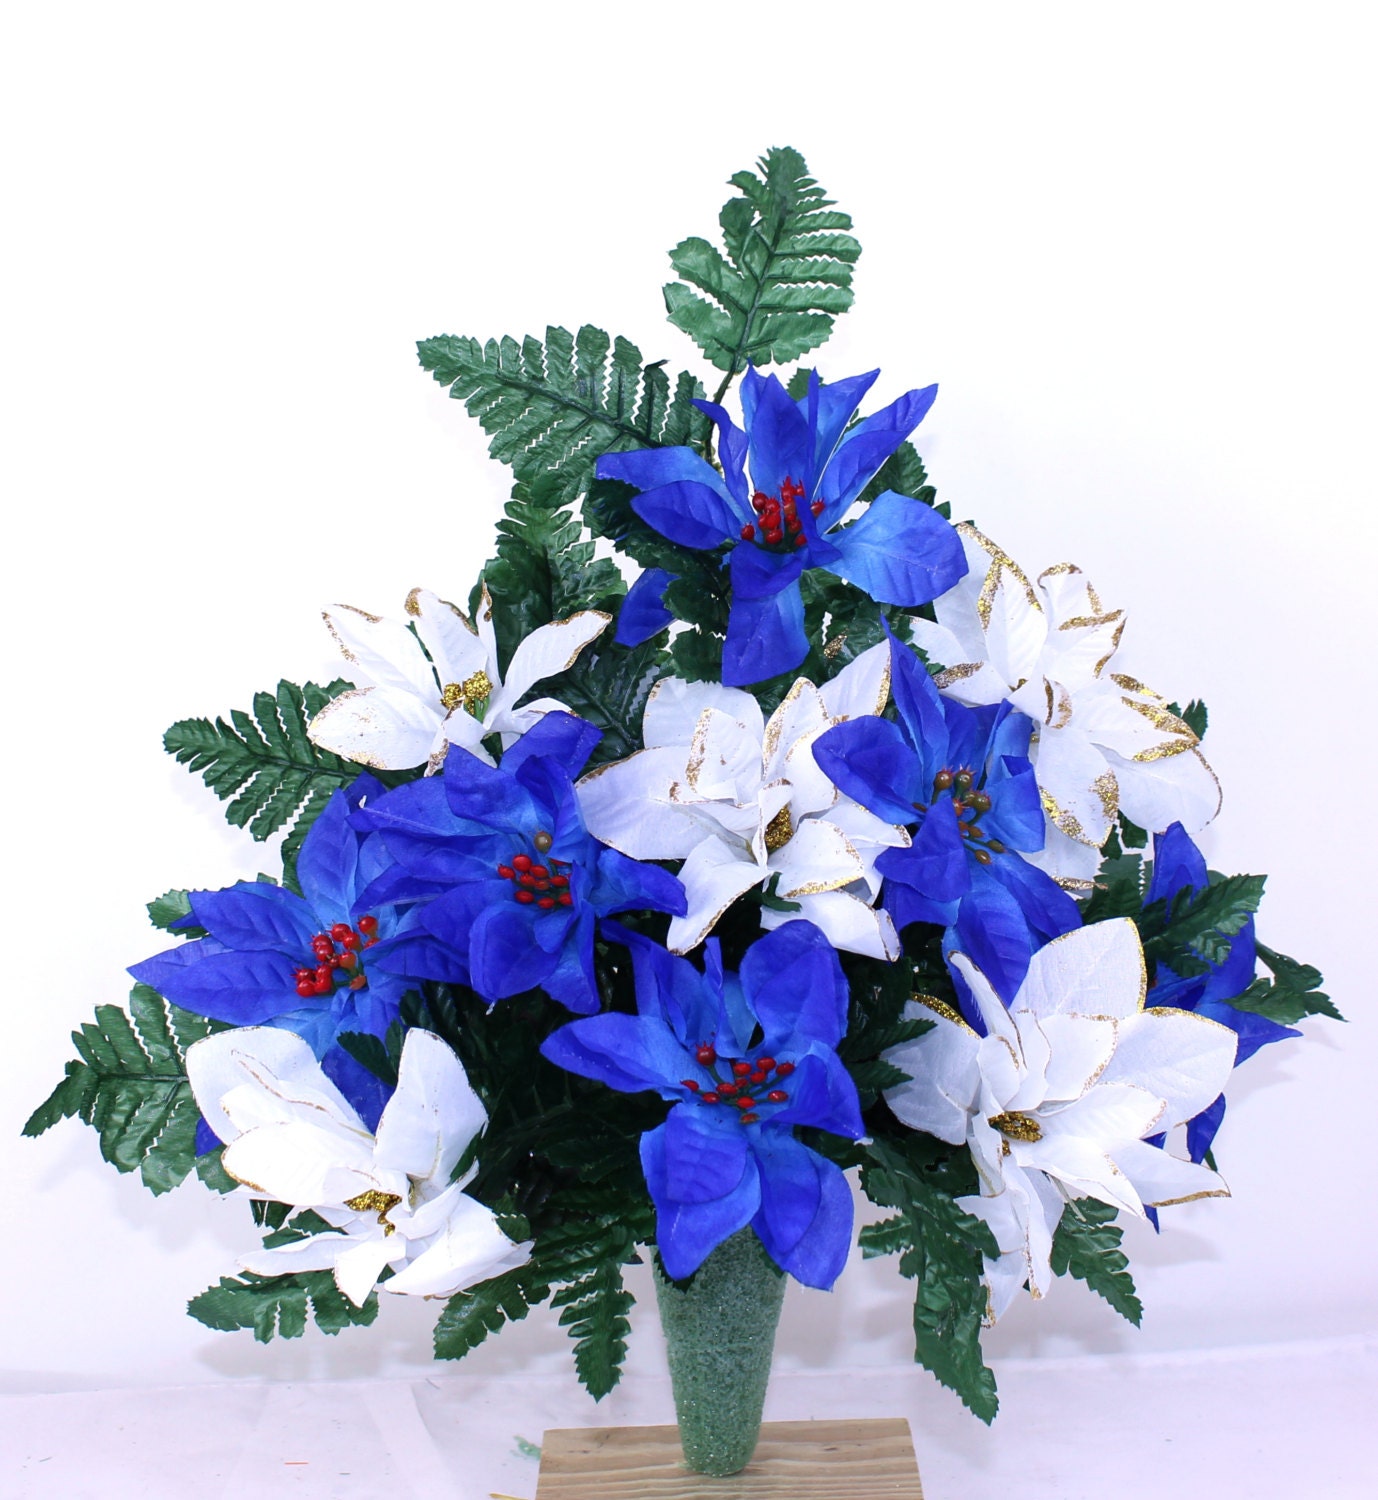 Gorgeous Christmas Blue And White Poinsettia's by Crazyboutdeco